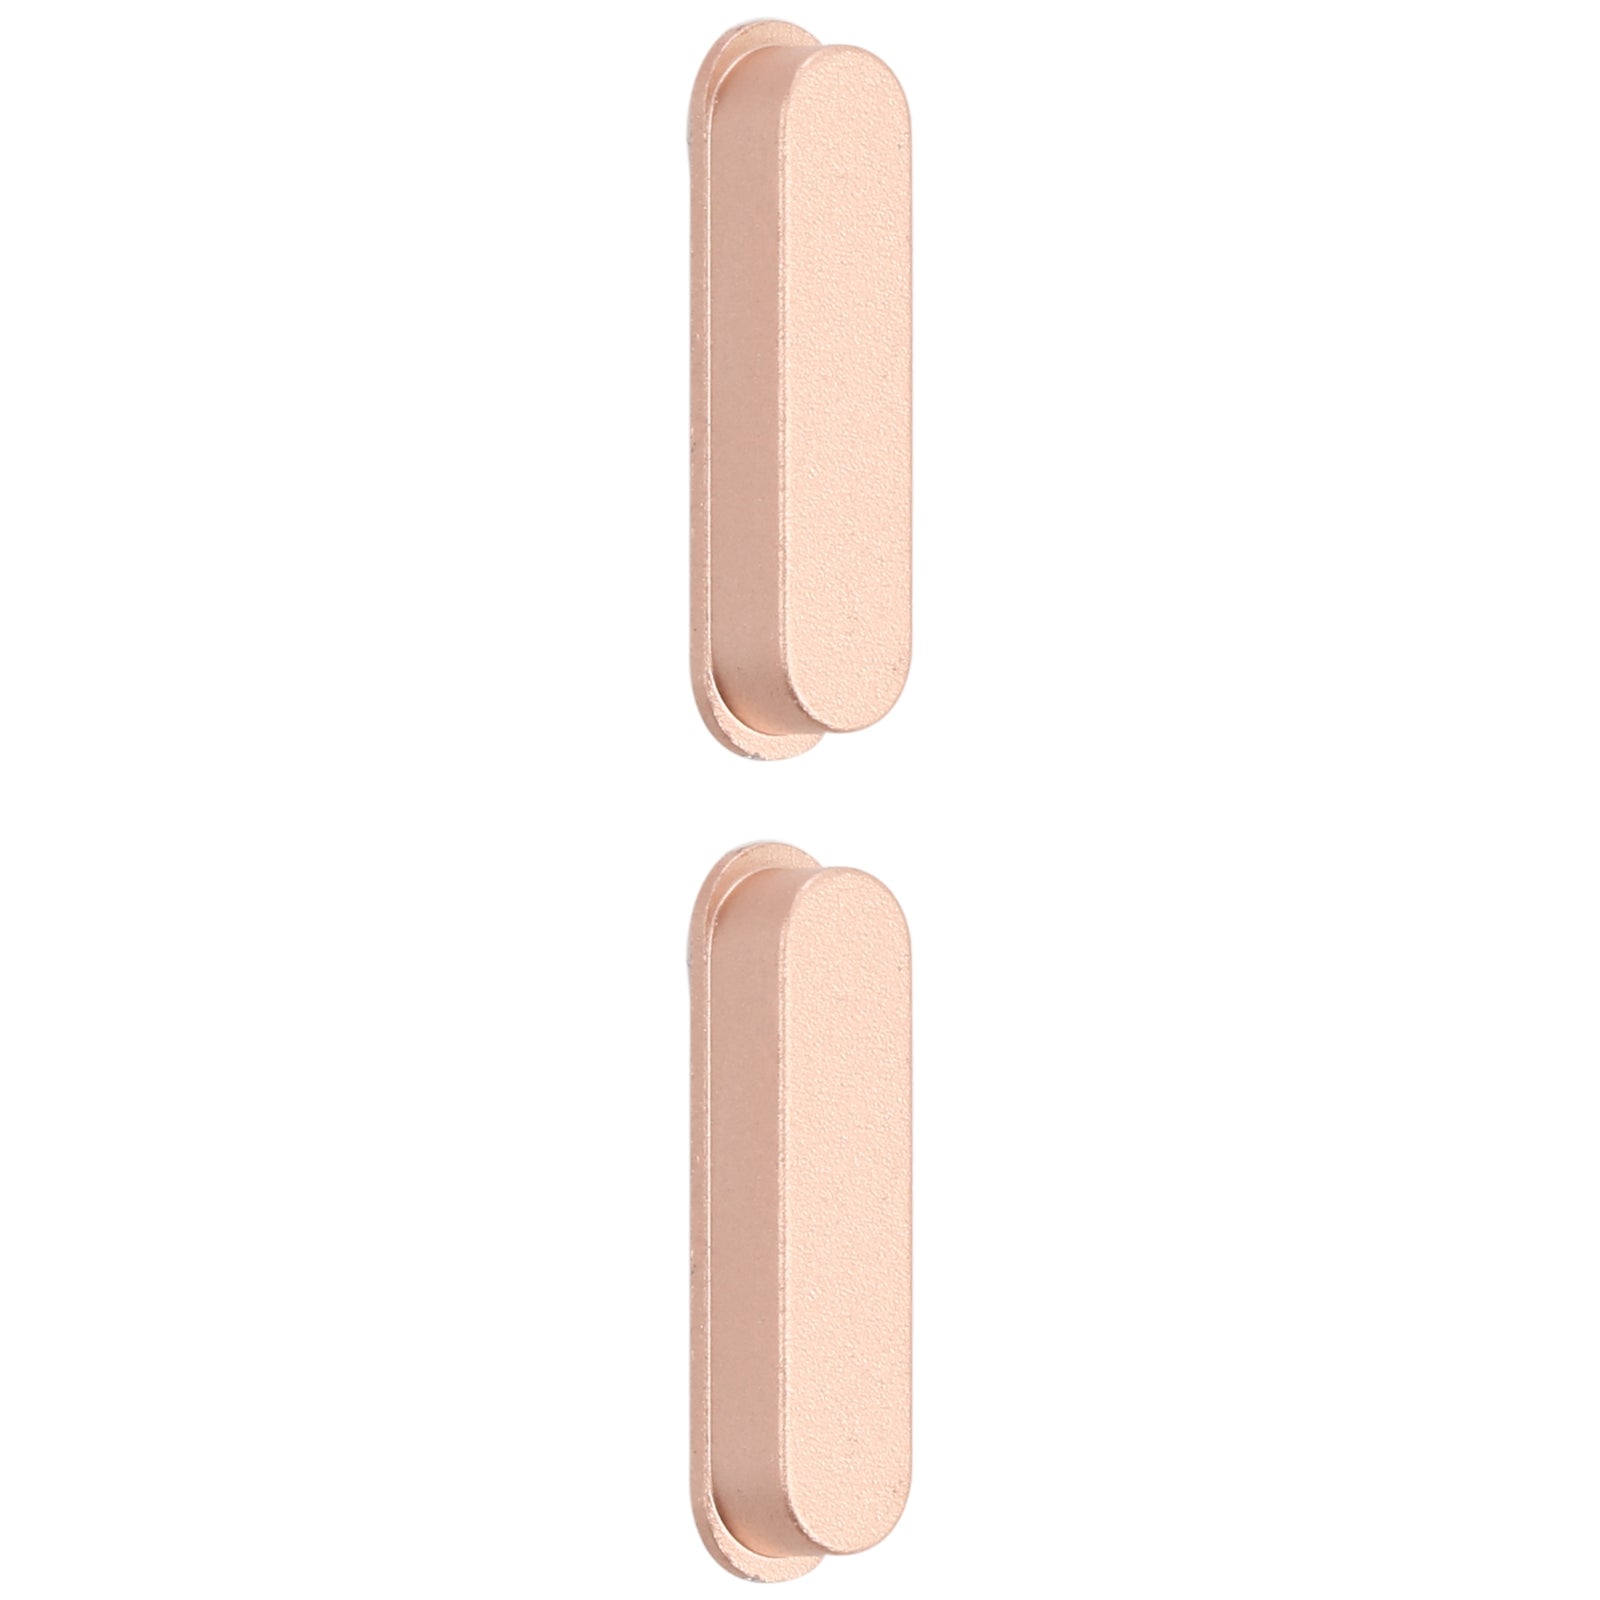 Outer Volume Button Apple iPad Air 4 10.9 2020 A2316 A2324 A2325 A2072 Pink